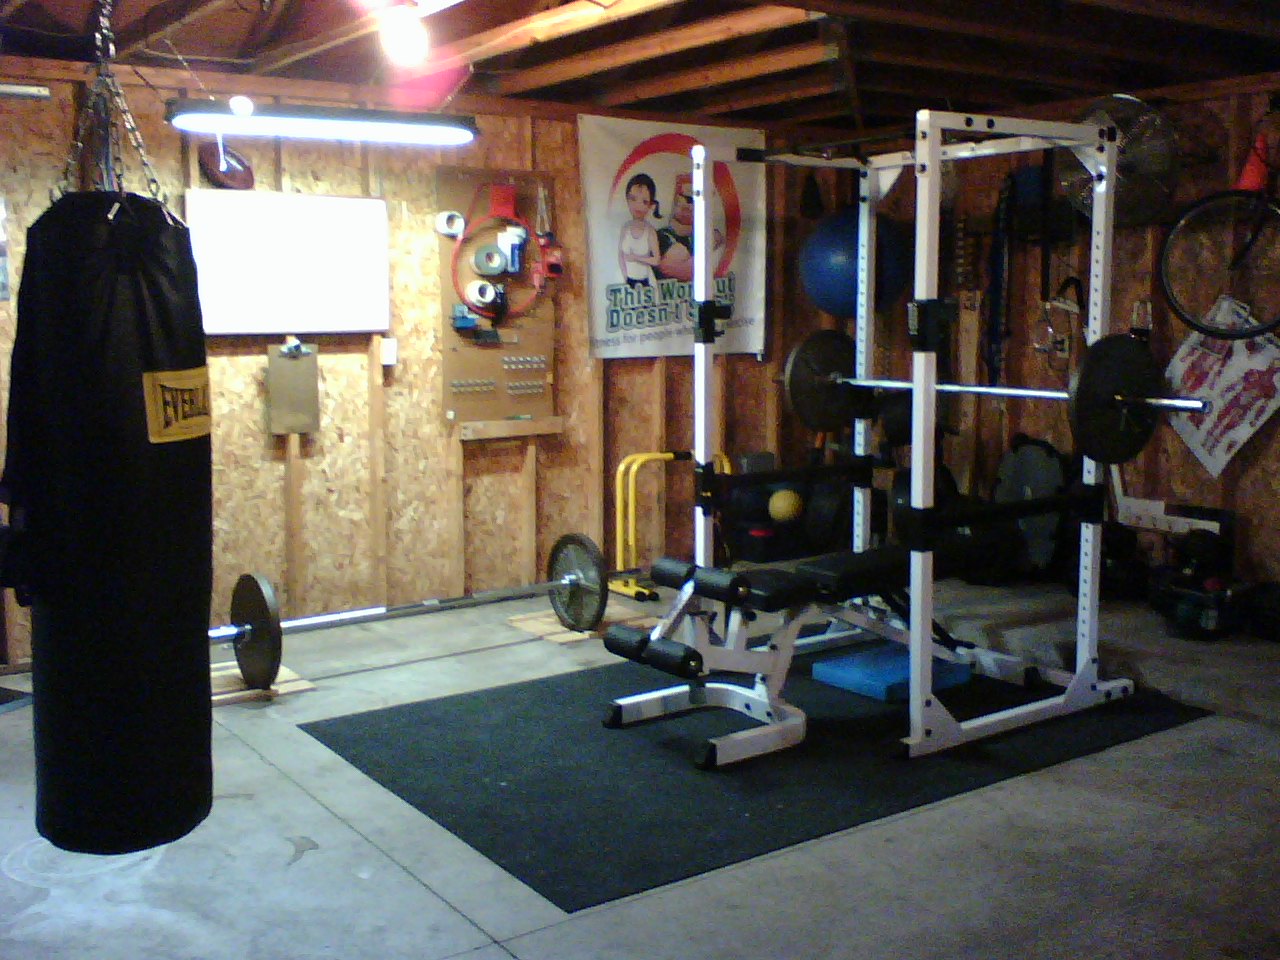 Garage Home Gym